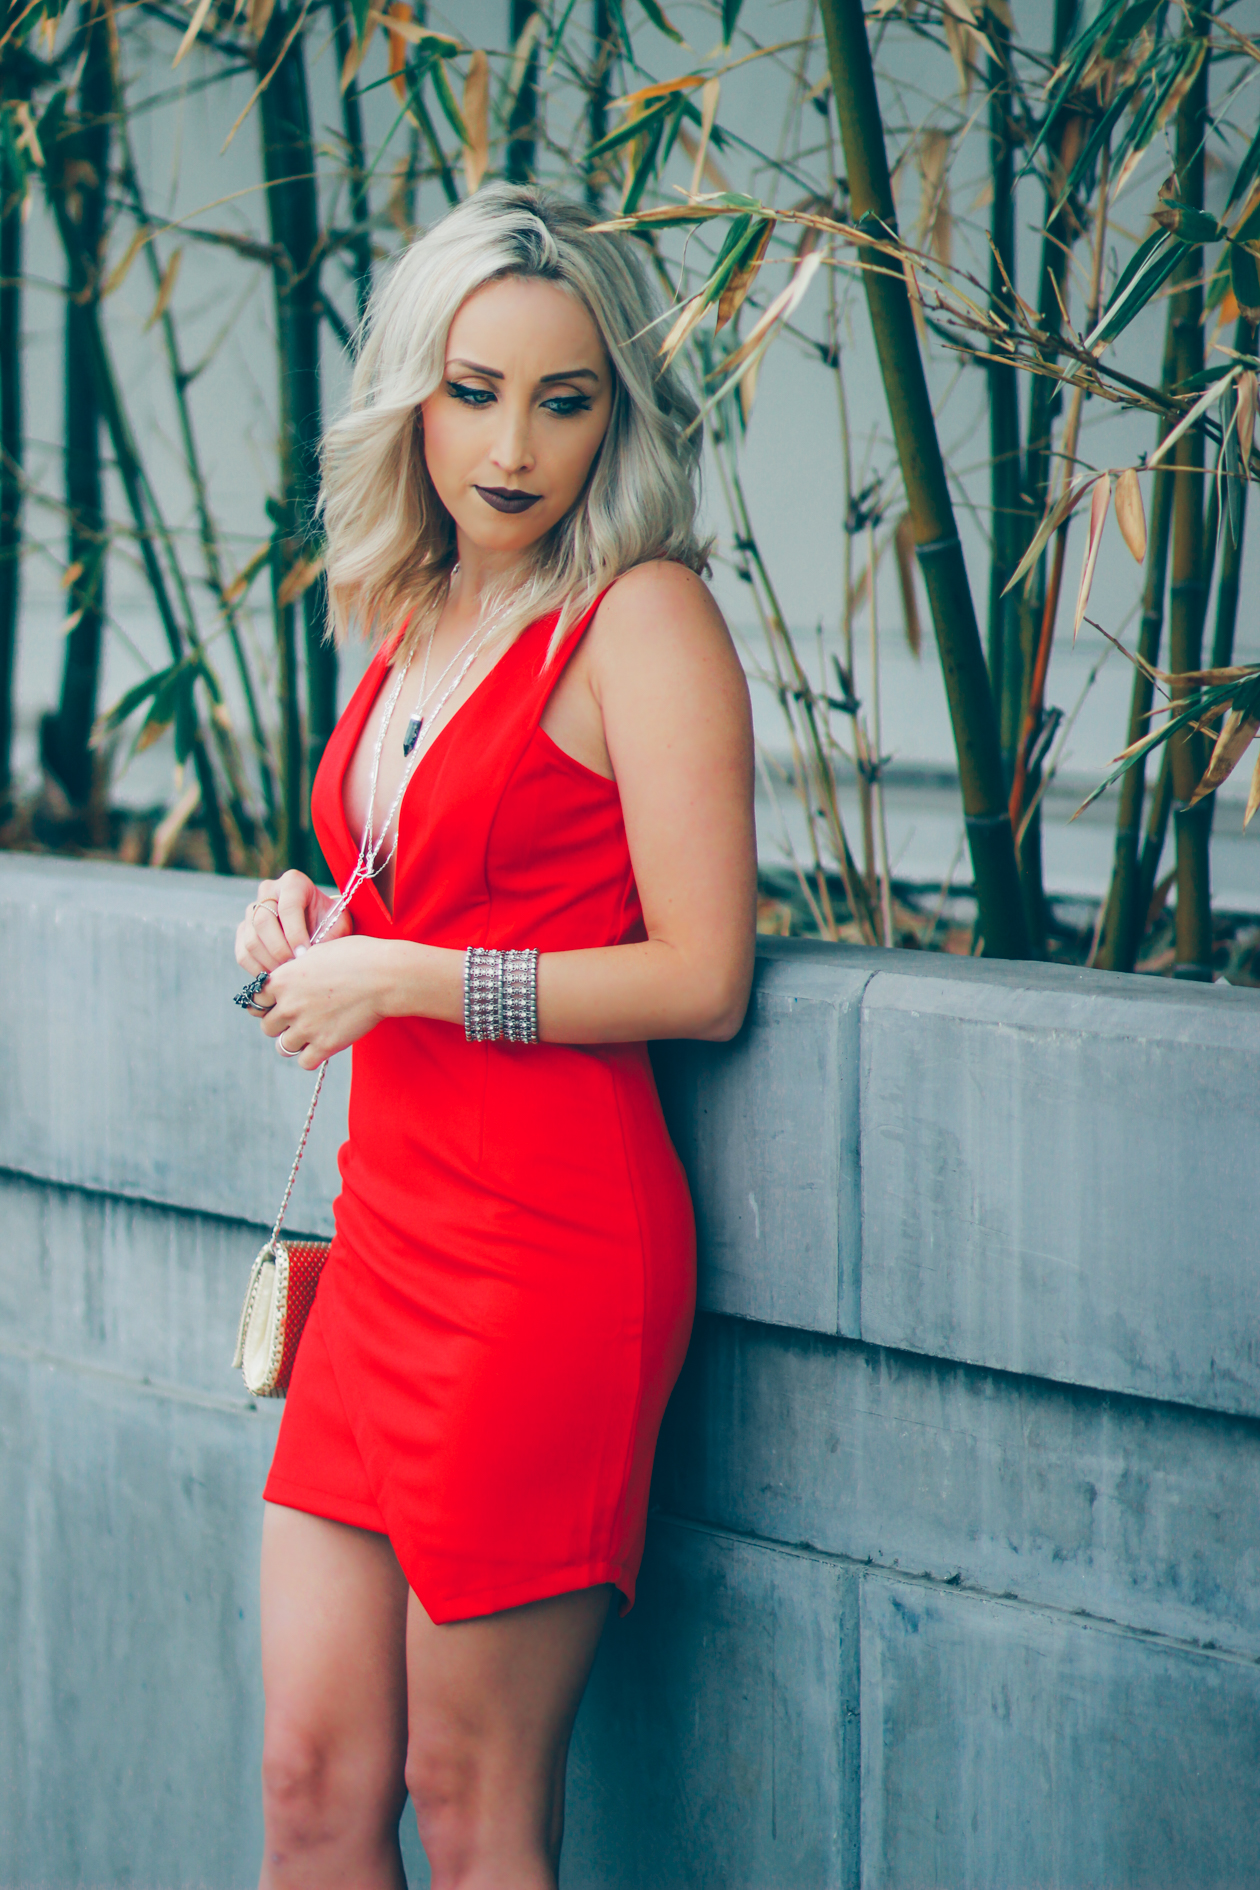 Low-Cut Red Dress | StyledByBlondie.com